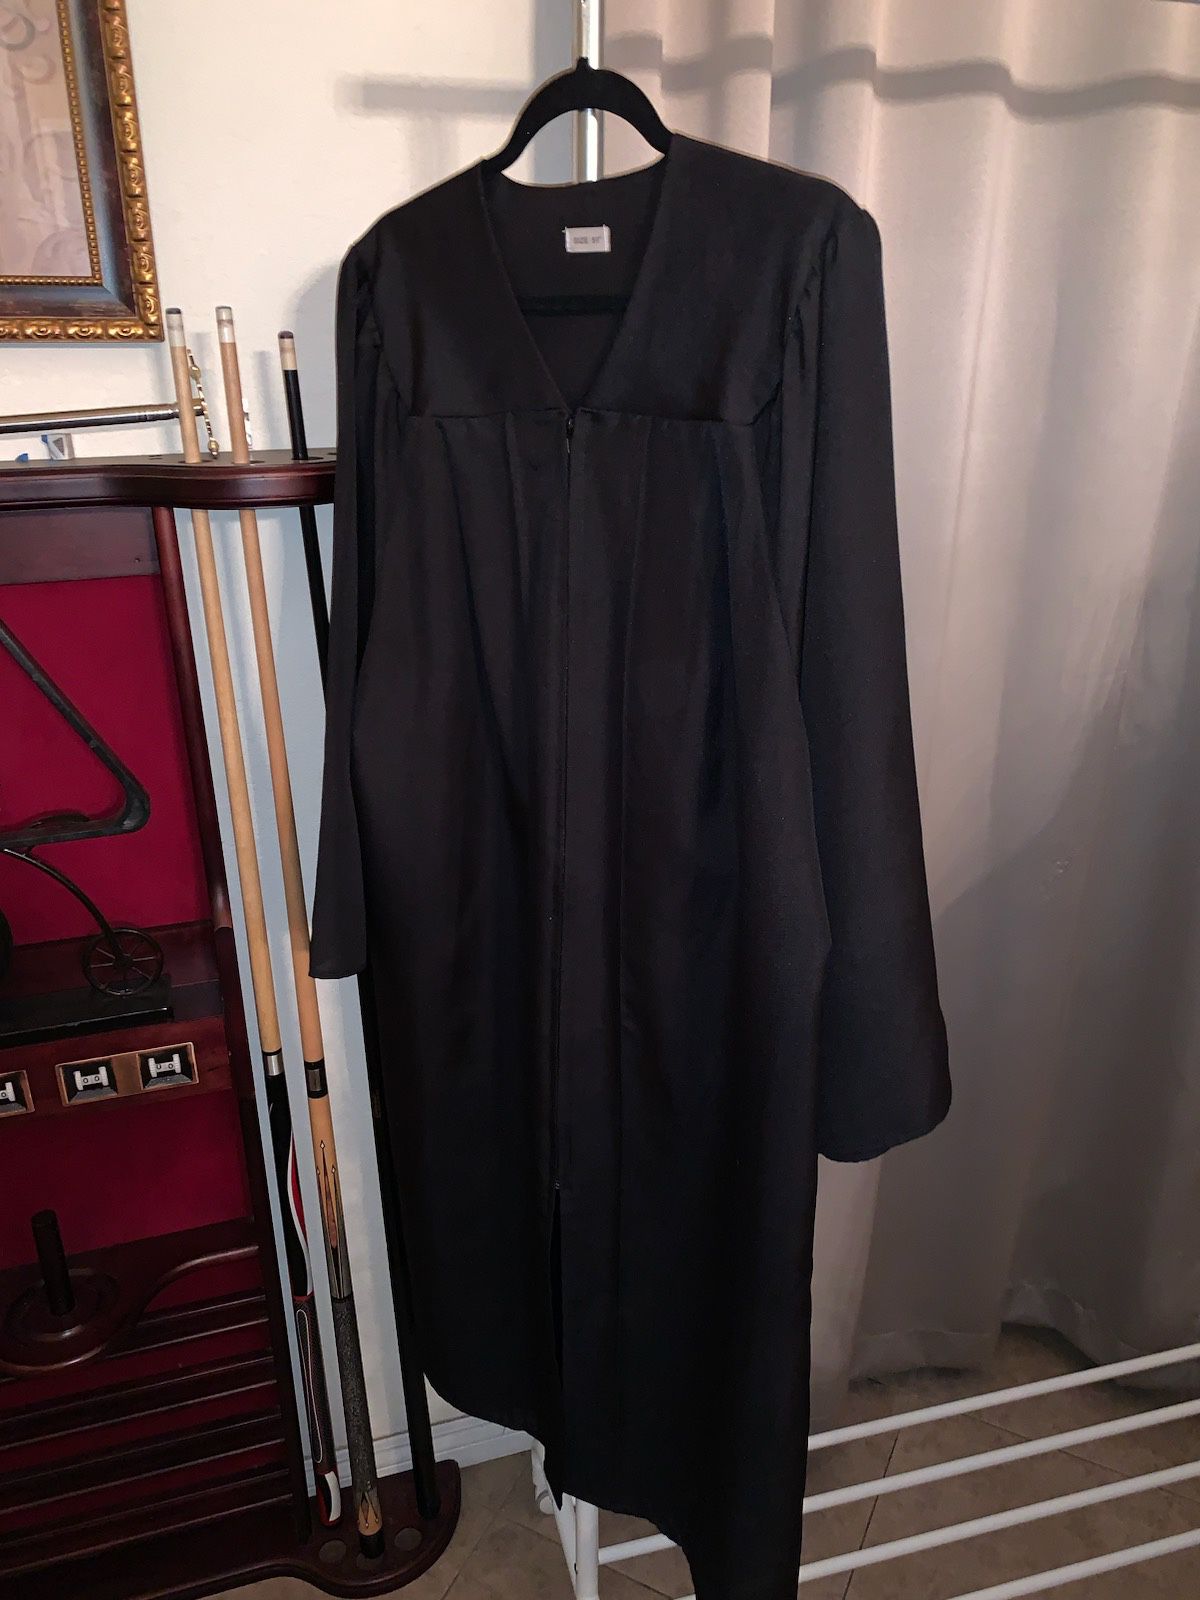 Graduation Beautiful Gown Black $10